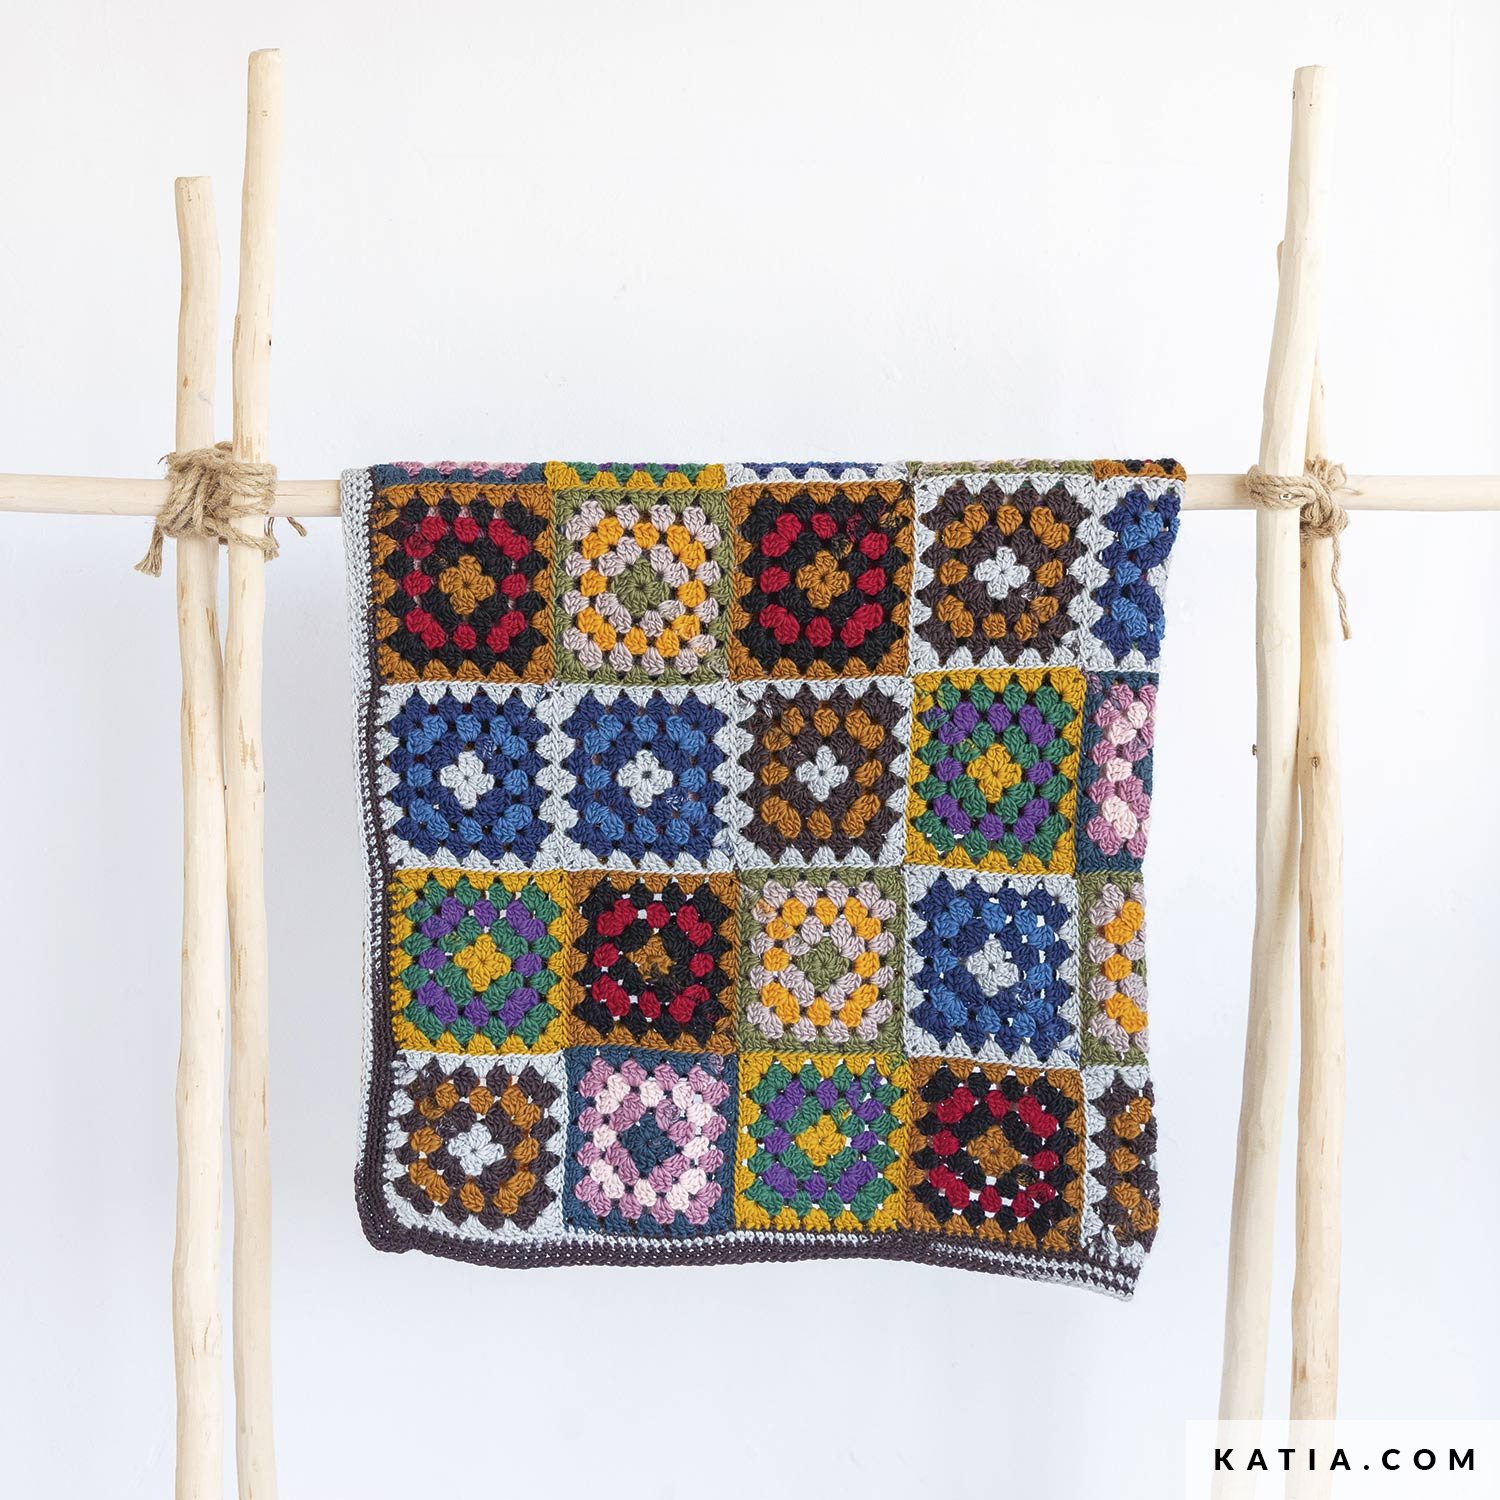 Free Blanket Knitting Pattern for Super Bulky Yarn - The Boulevard